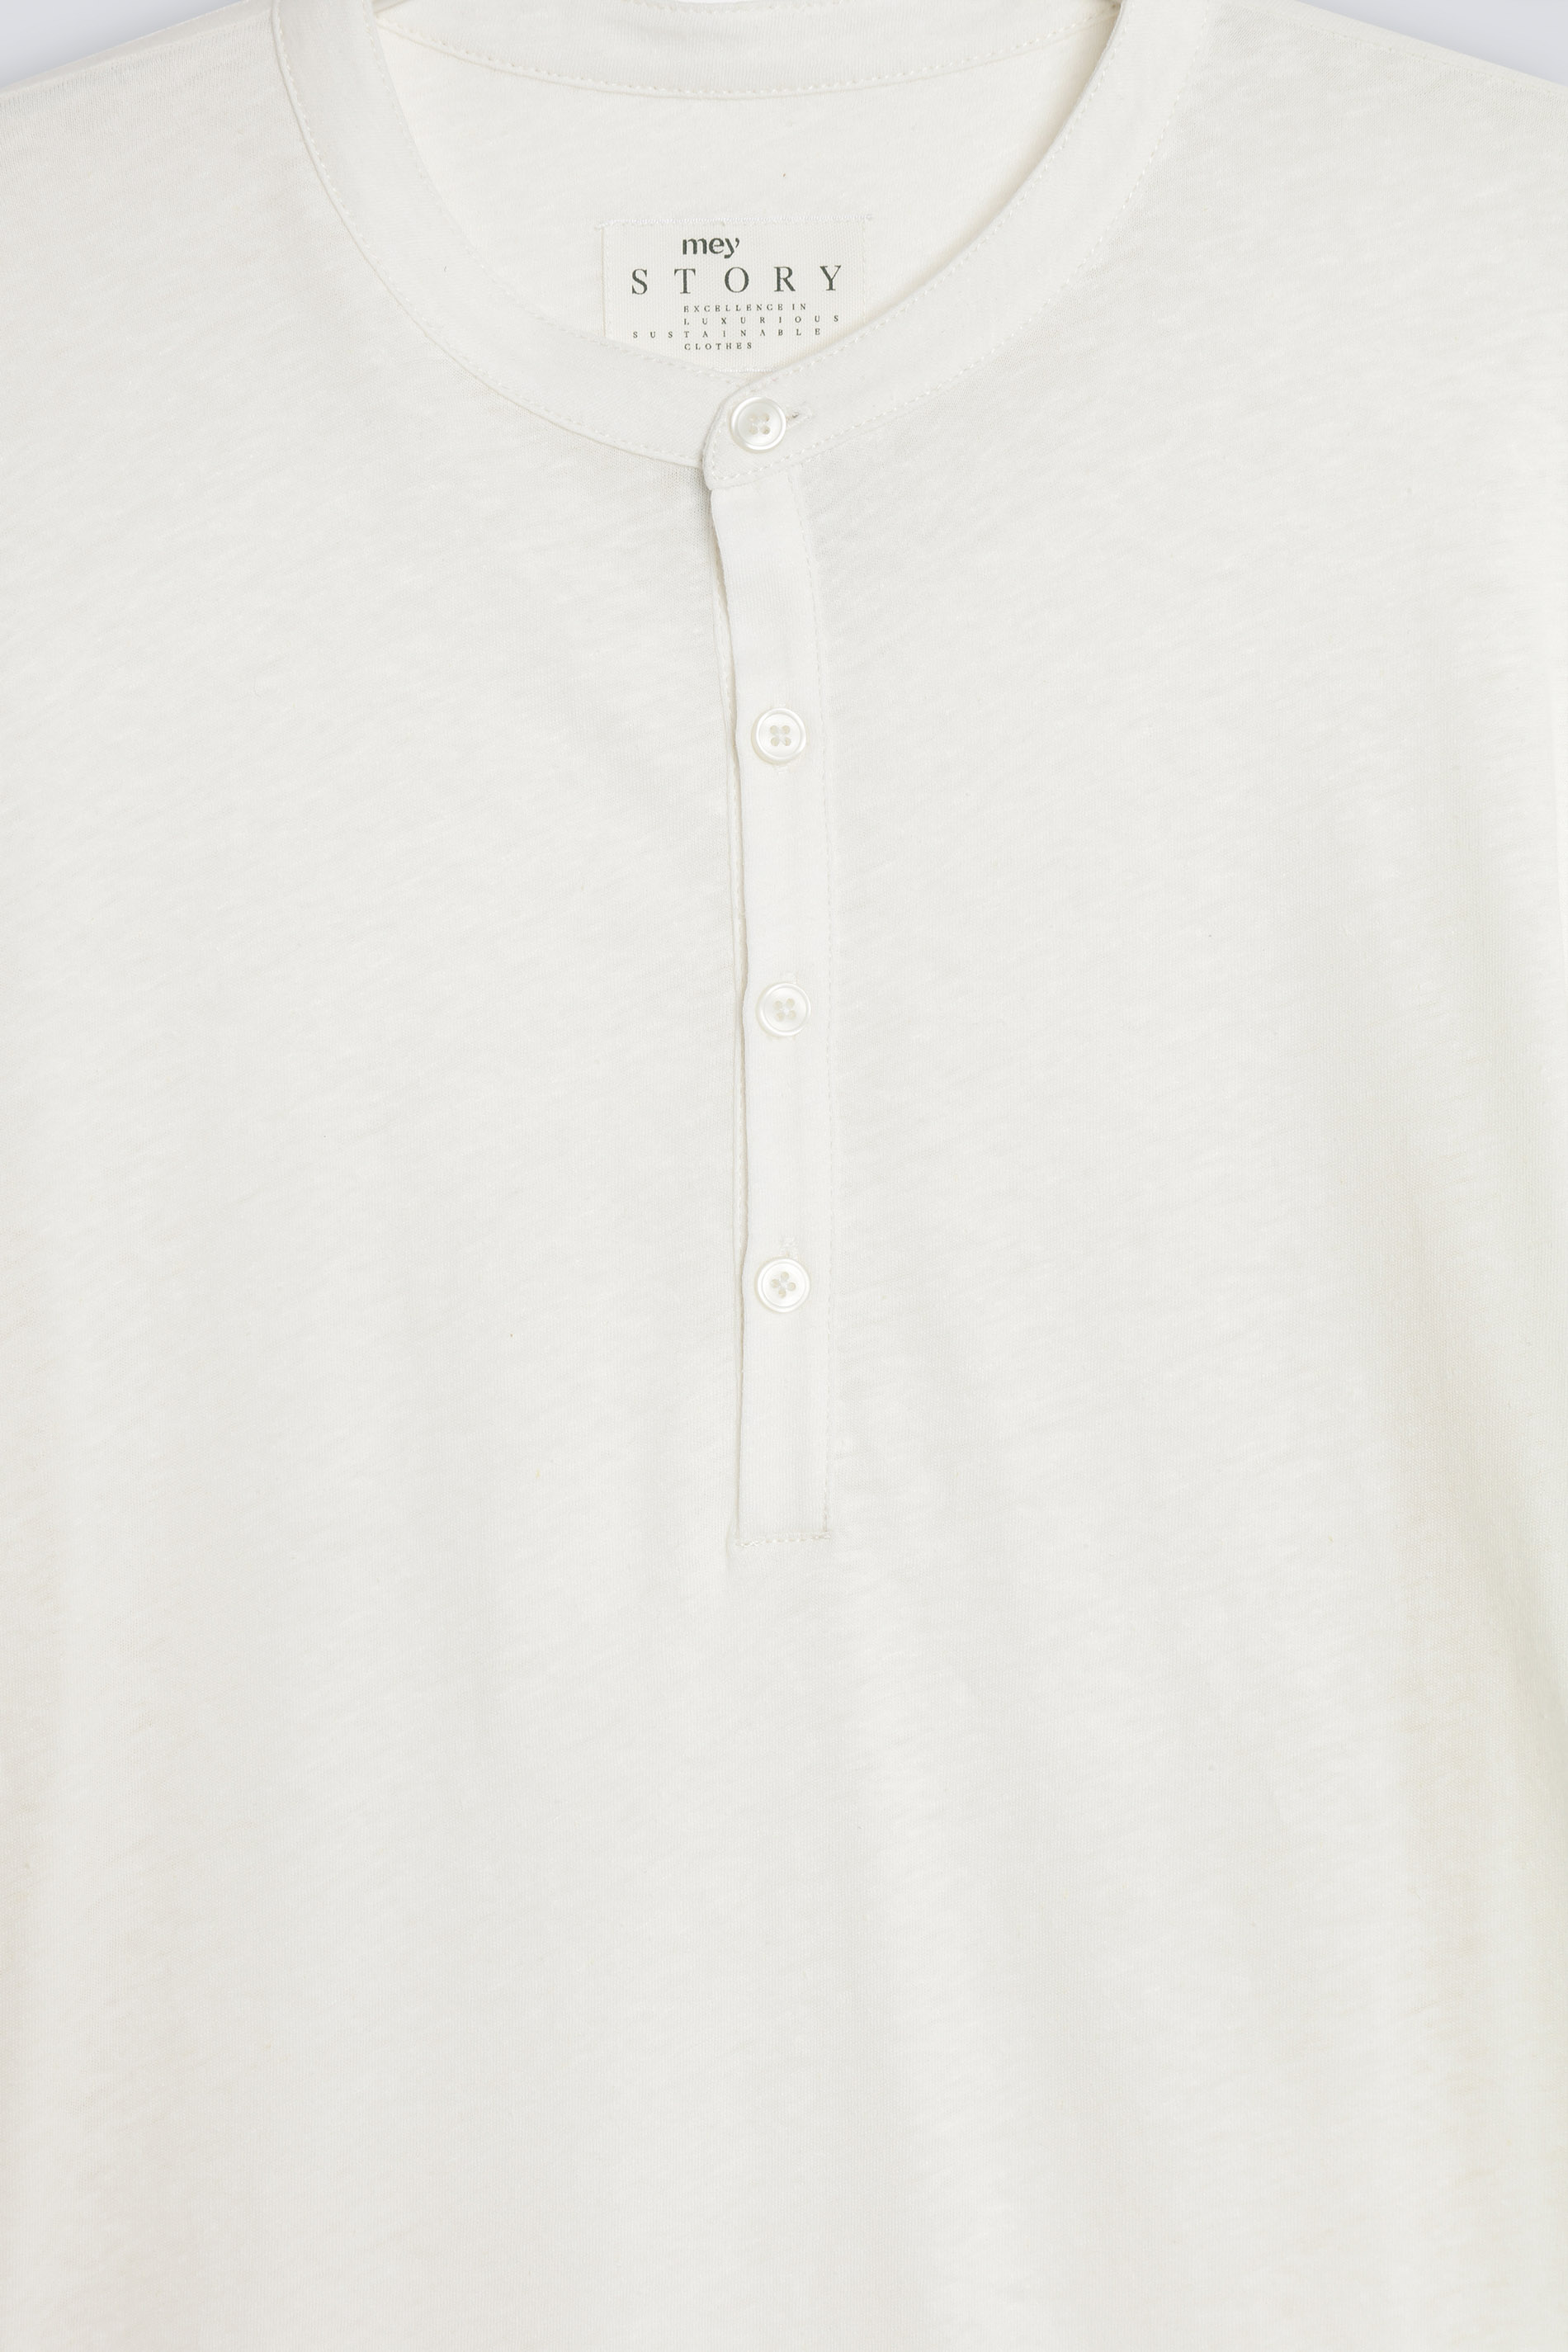 Shirt Serafino Serie Lino Detailansicht 01 | mey®